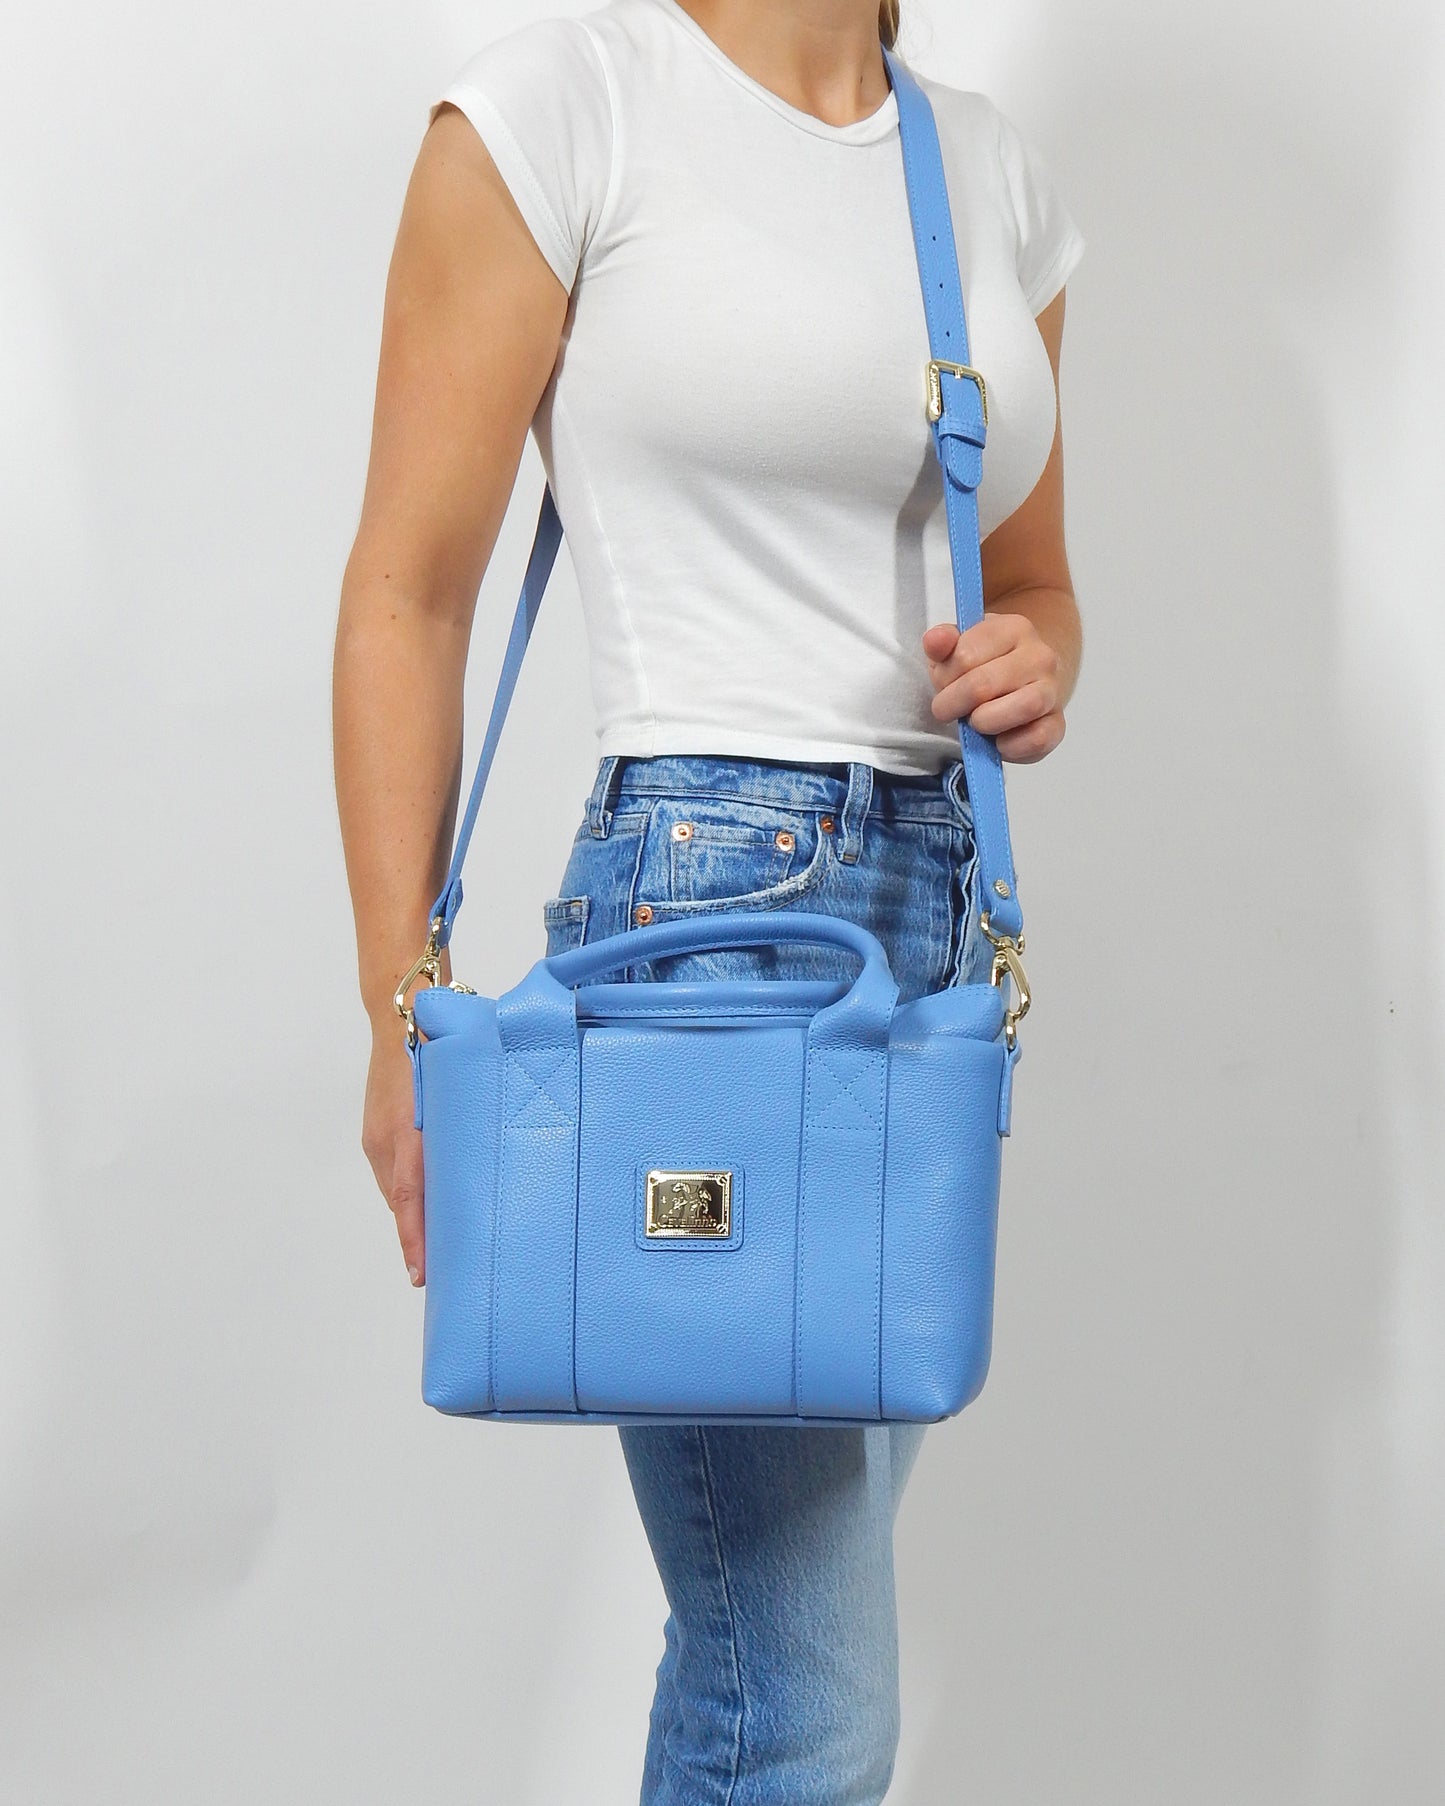 Cavalinho Muse Leather Handbag - CornflowerBlue - bodyshot_0486_2